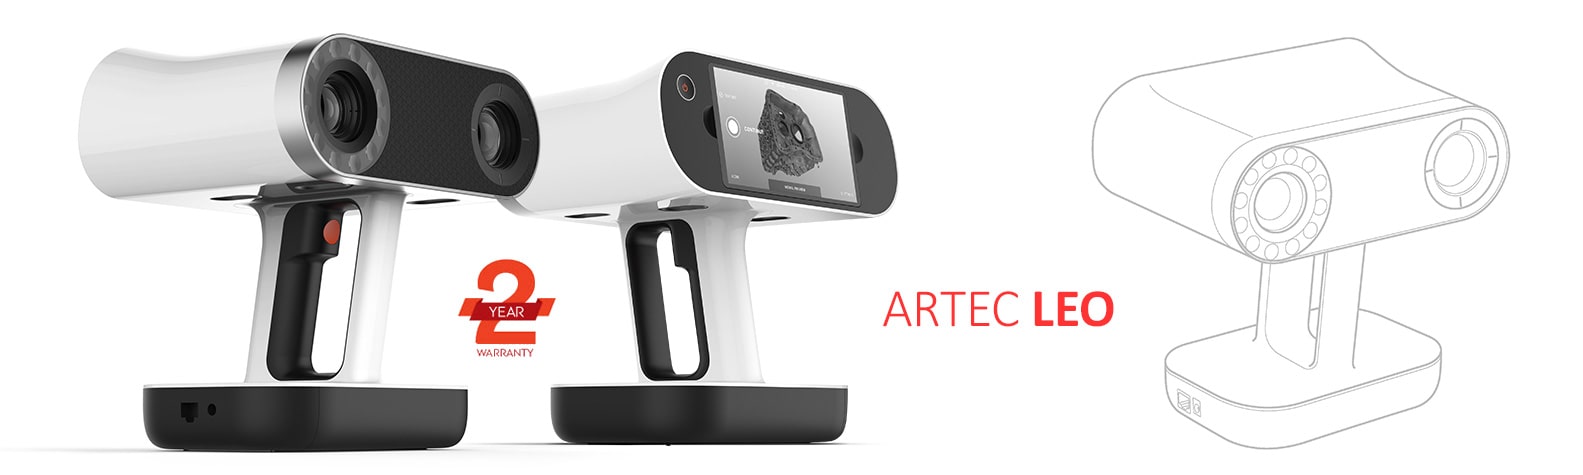 Artec Leo Wireless 3D Scanner